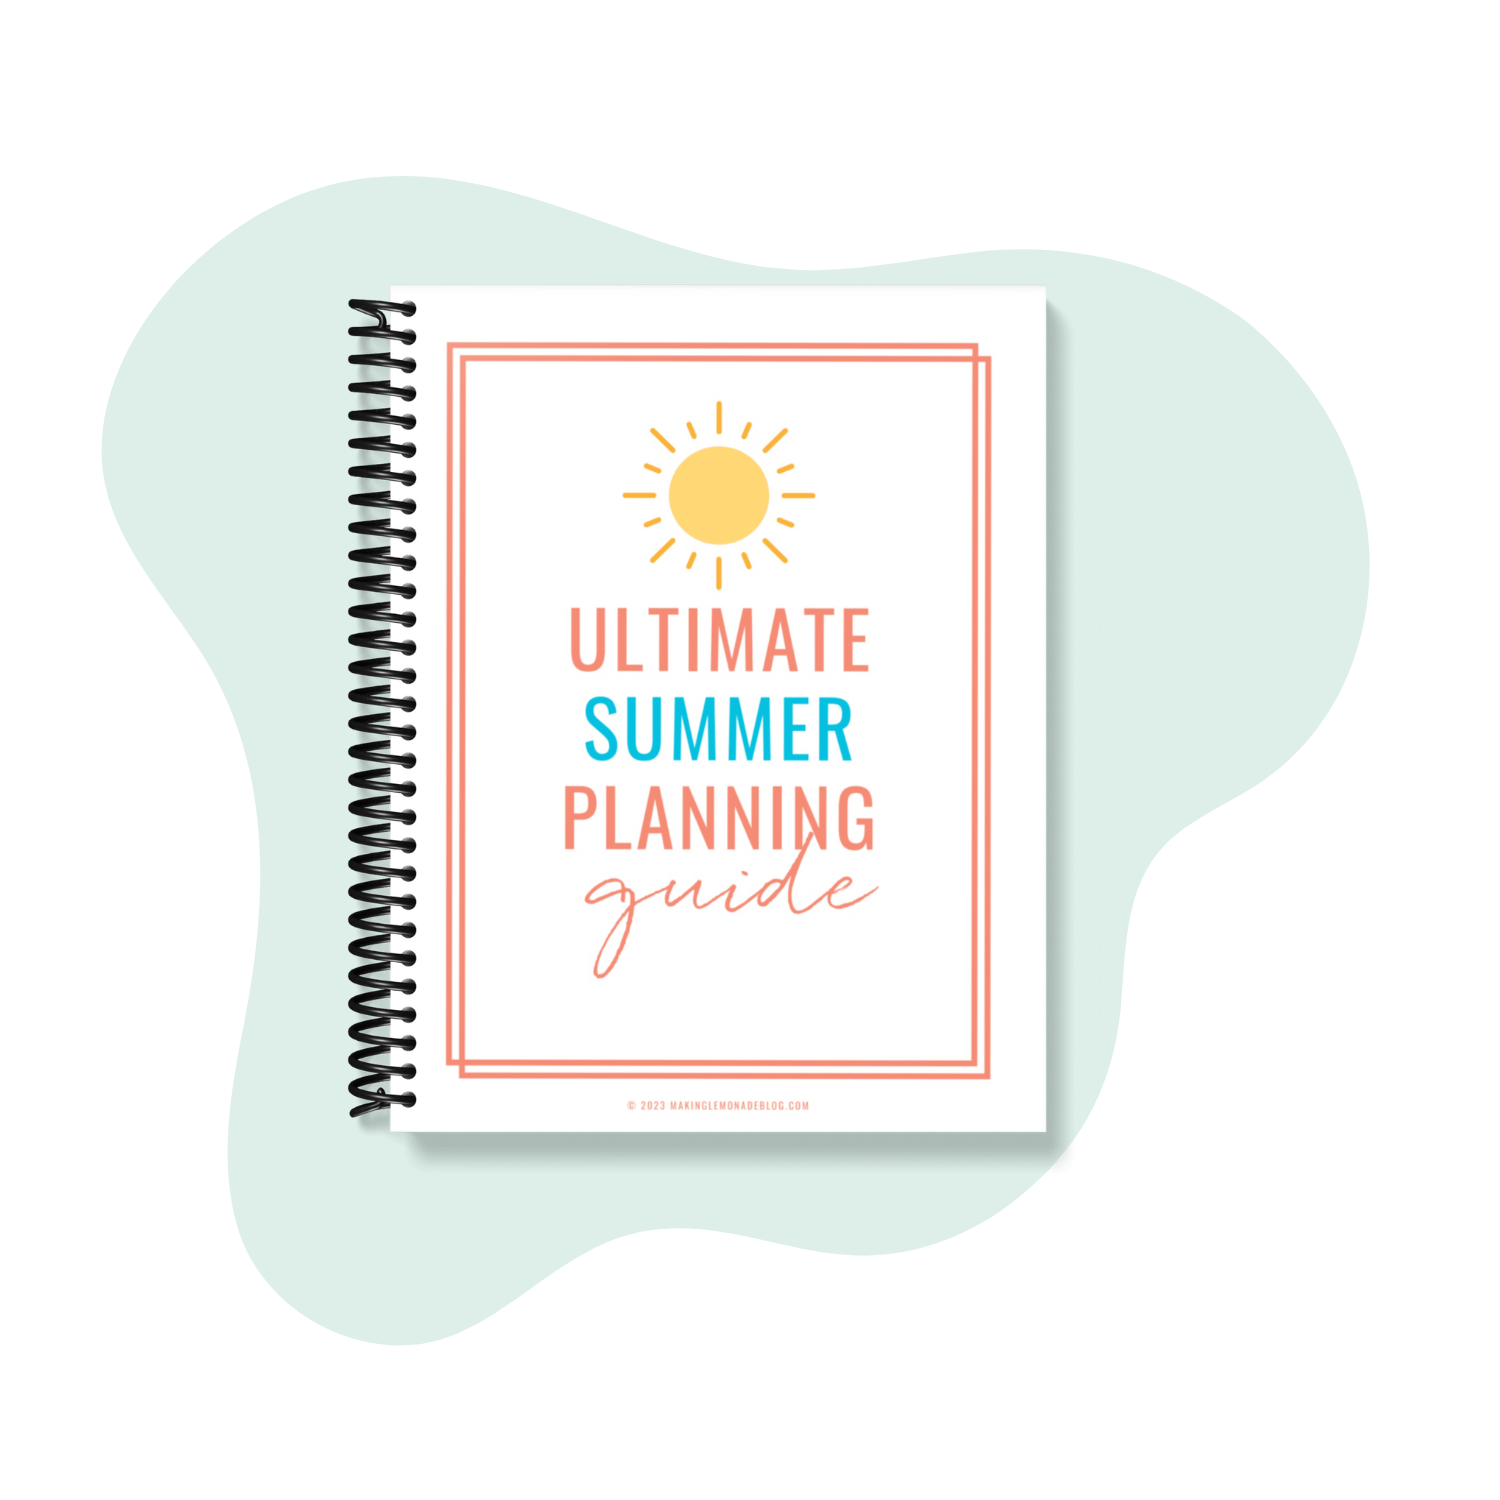 summer planning guide - help you plan an amazing summer